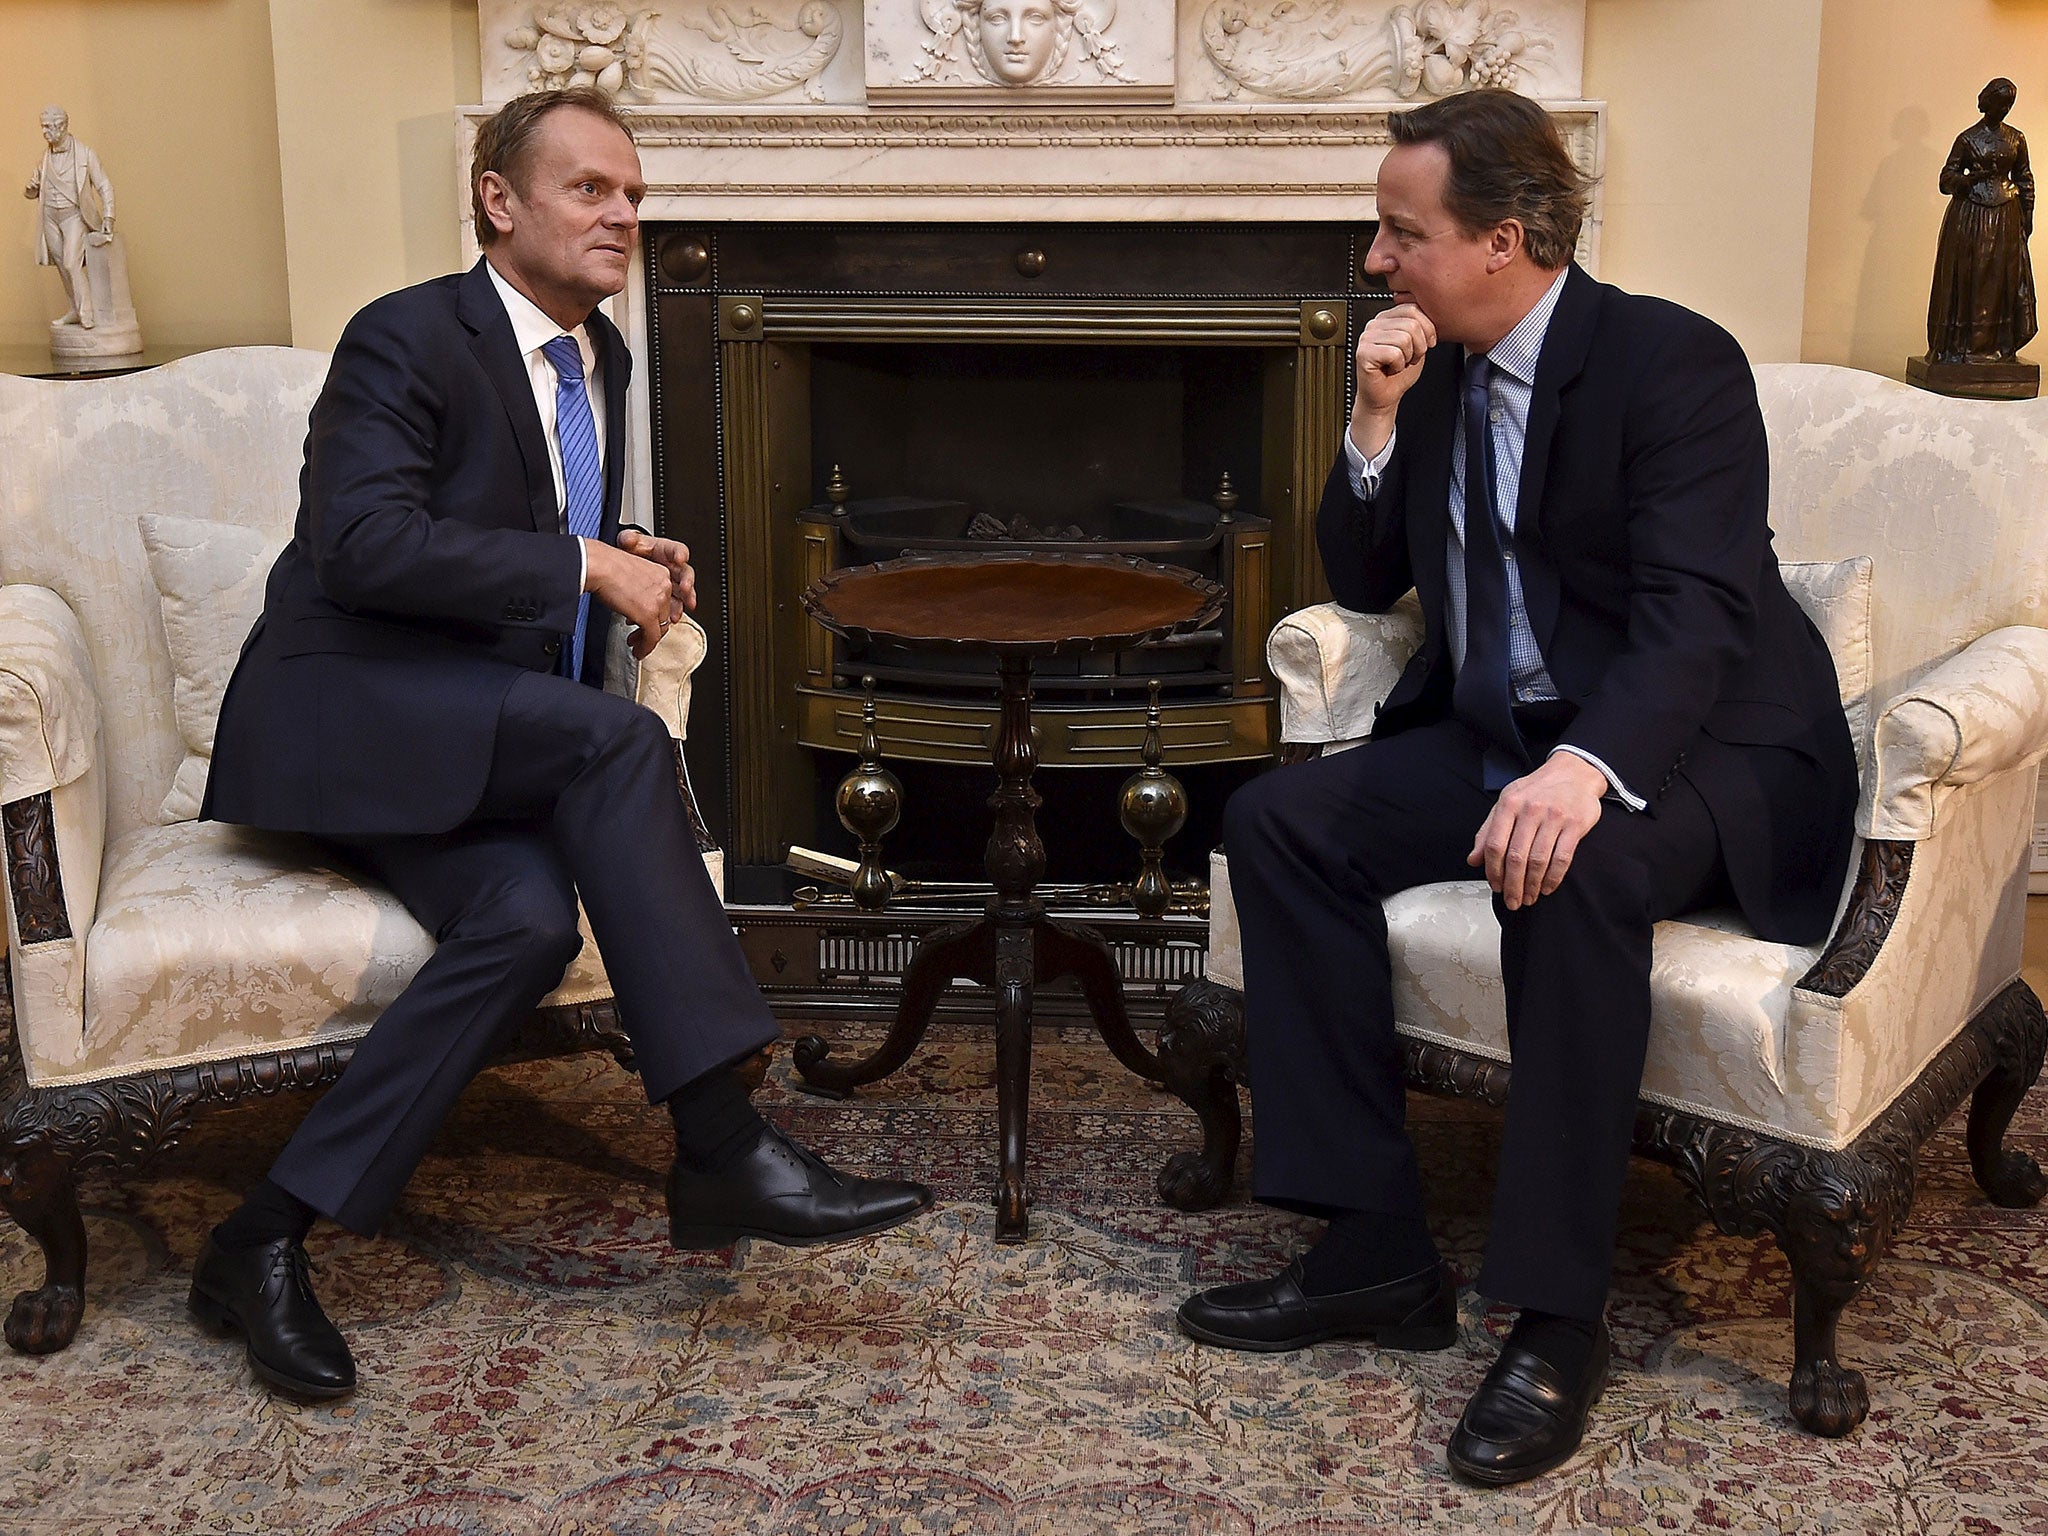 David Cameron with Donald Tusk, President of the European Council, at No 10